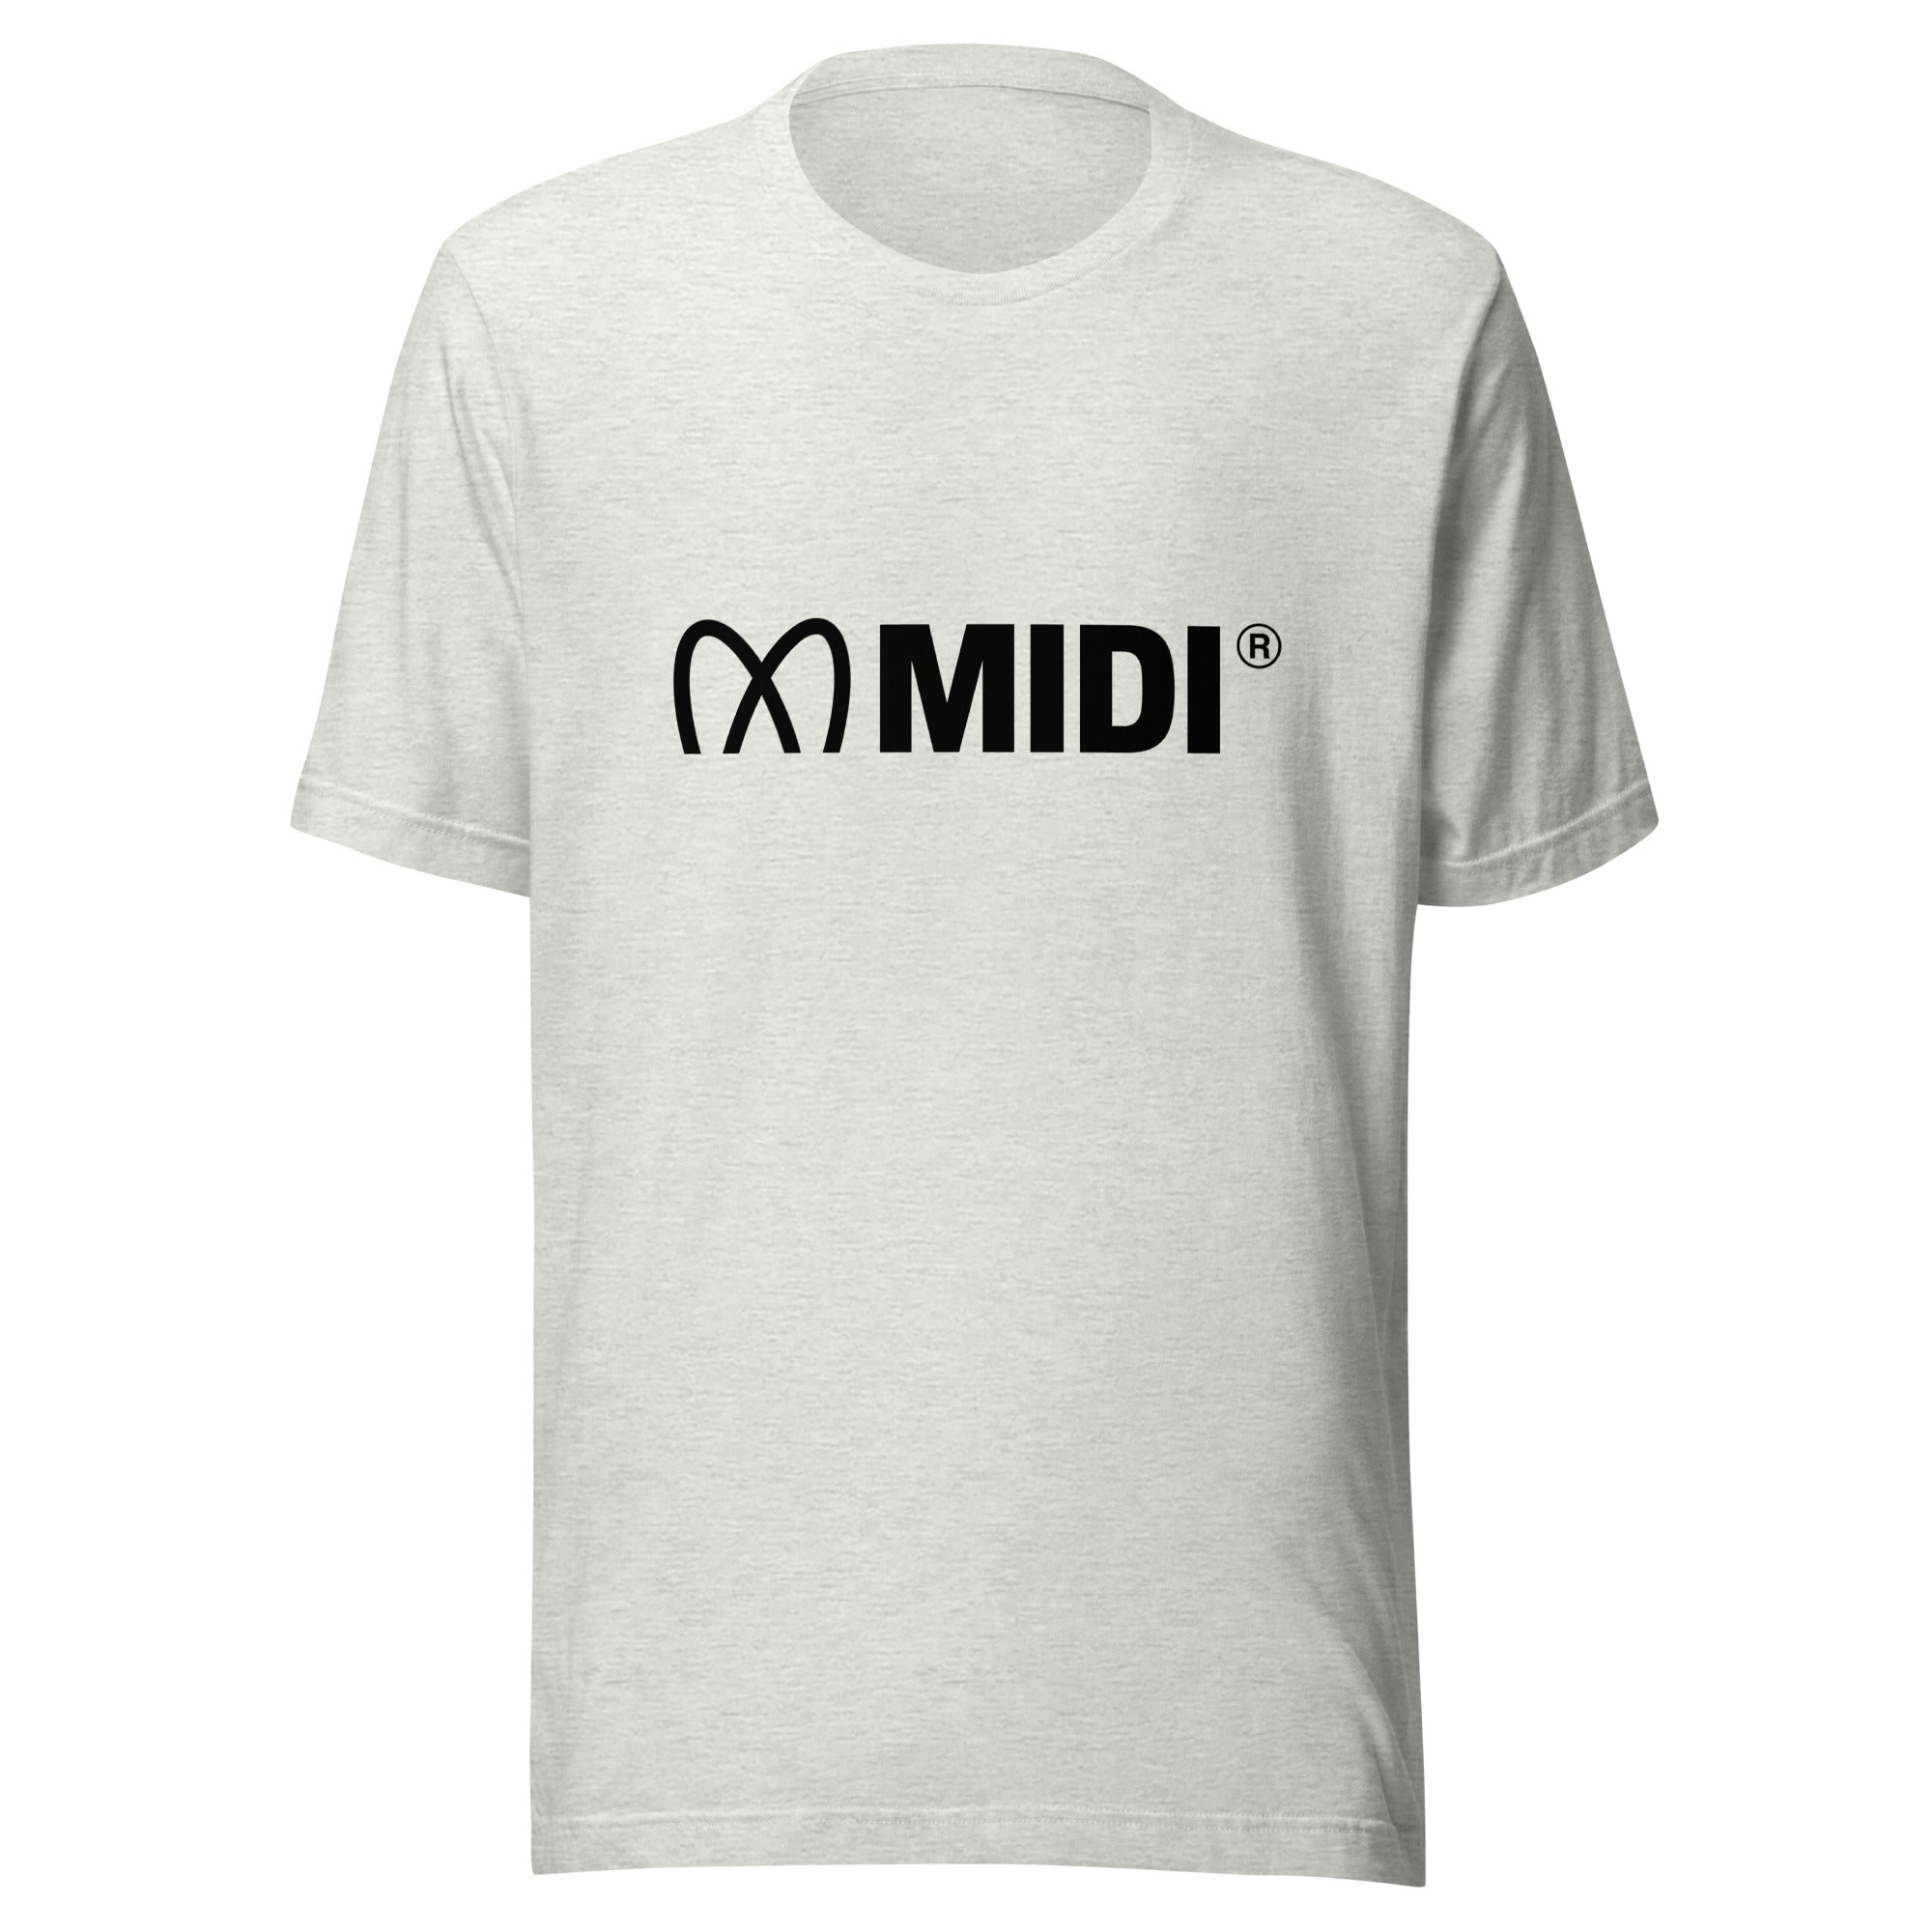 MIDI Short-Sleeve Unisex T-Shirt